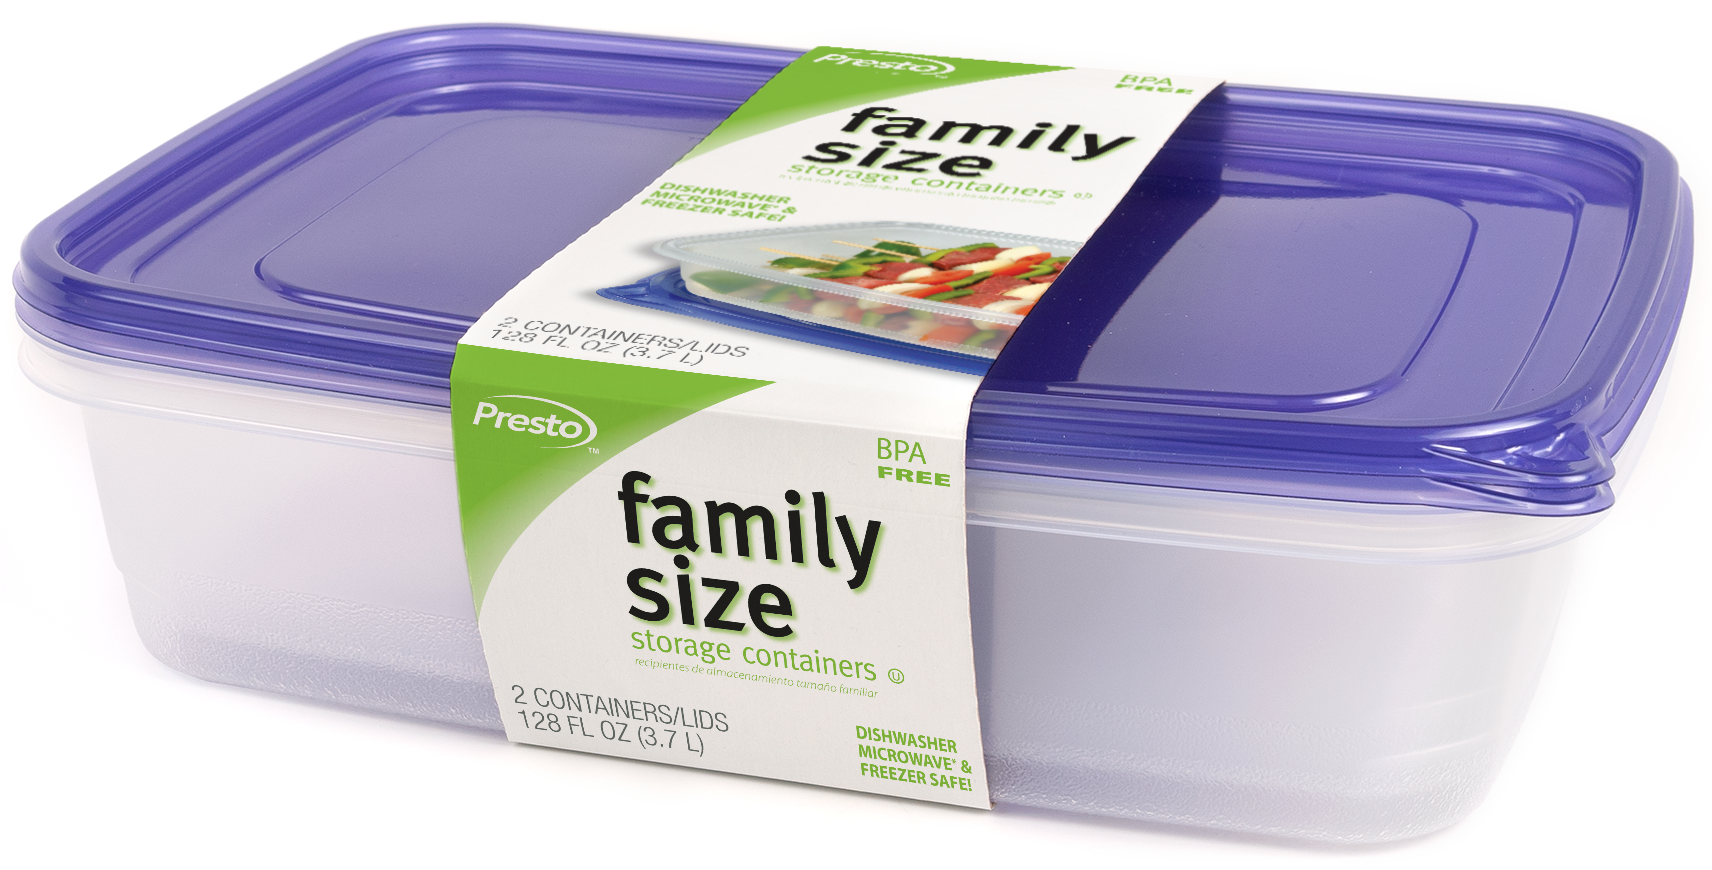 Glad Freezerware 2 Large Containers L With Lids BPA Free Freezer Dishwasher  Safe